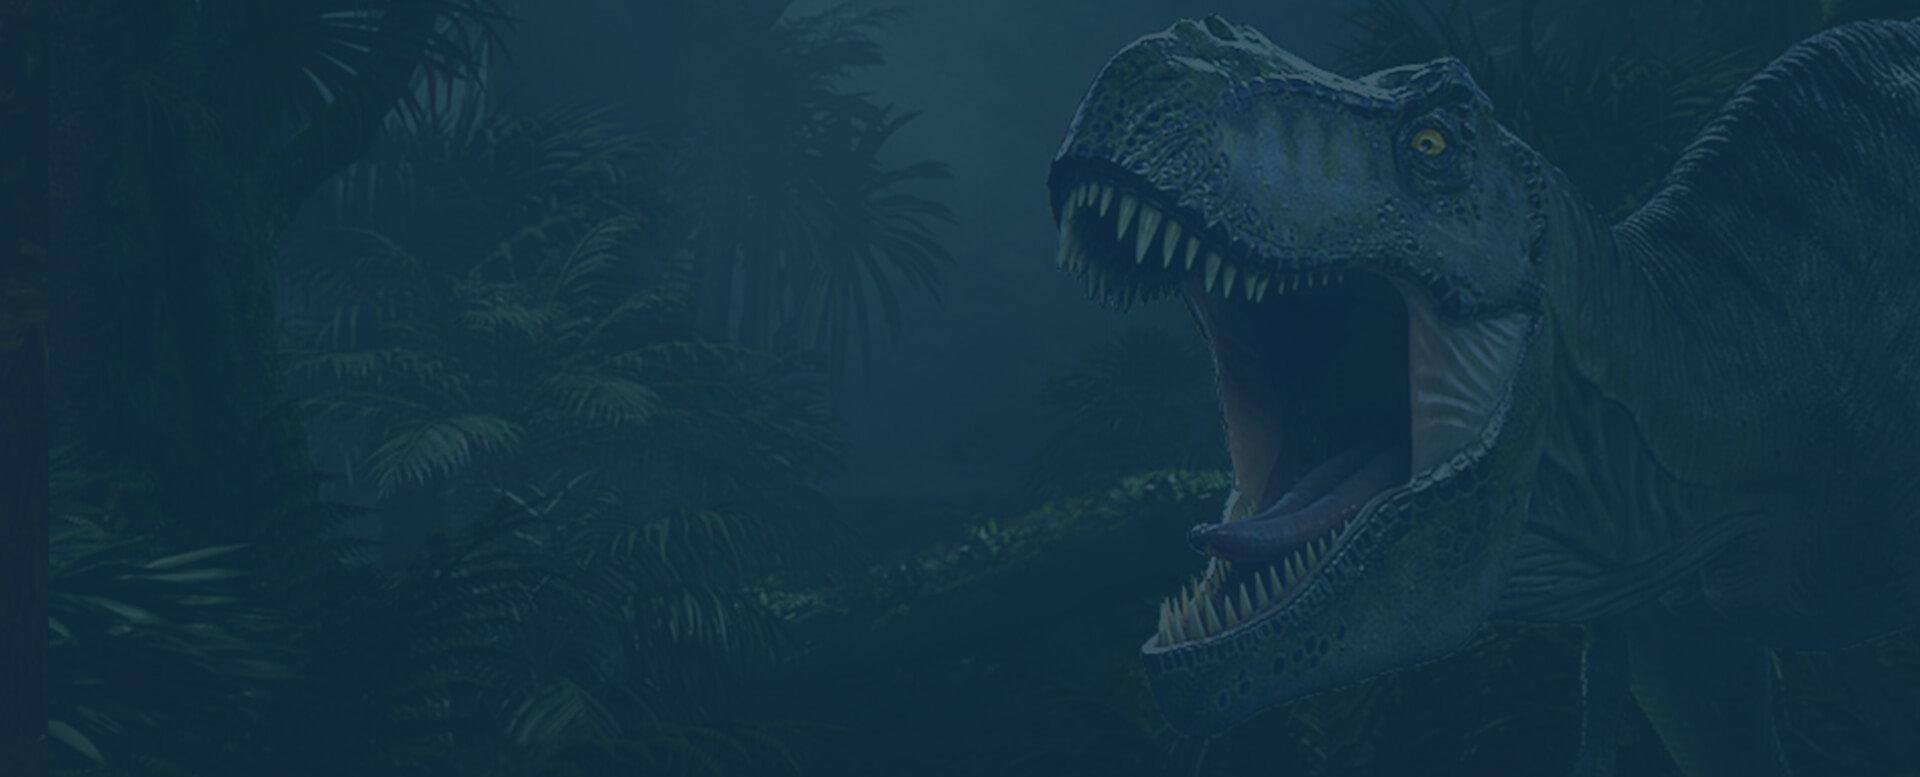 Jurassic Park video slot background image